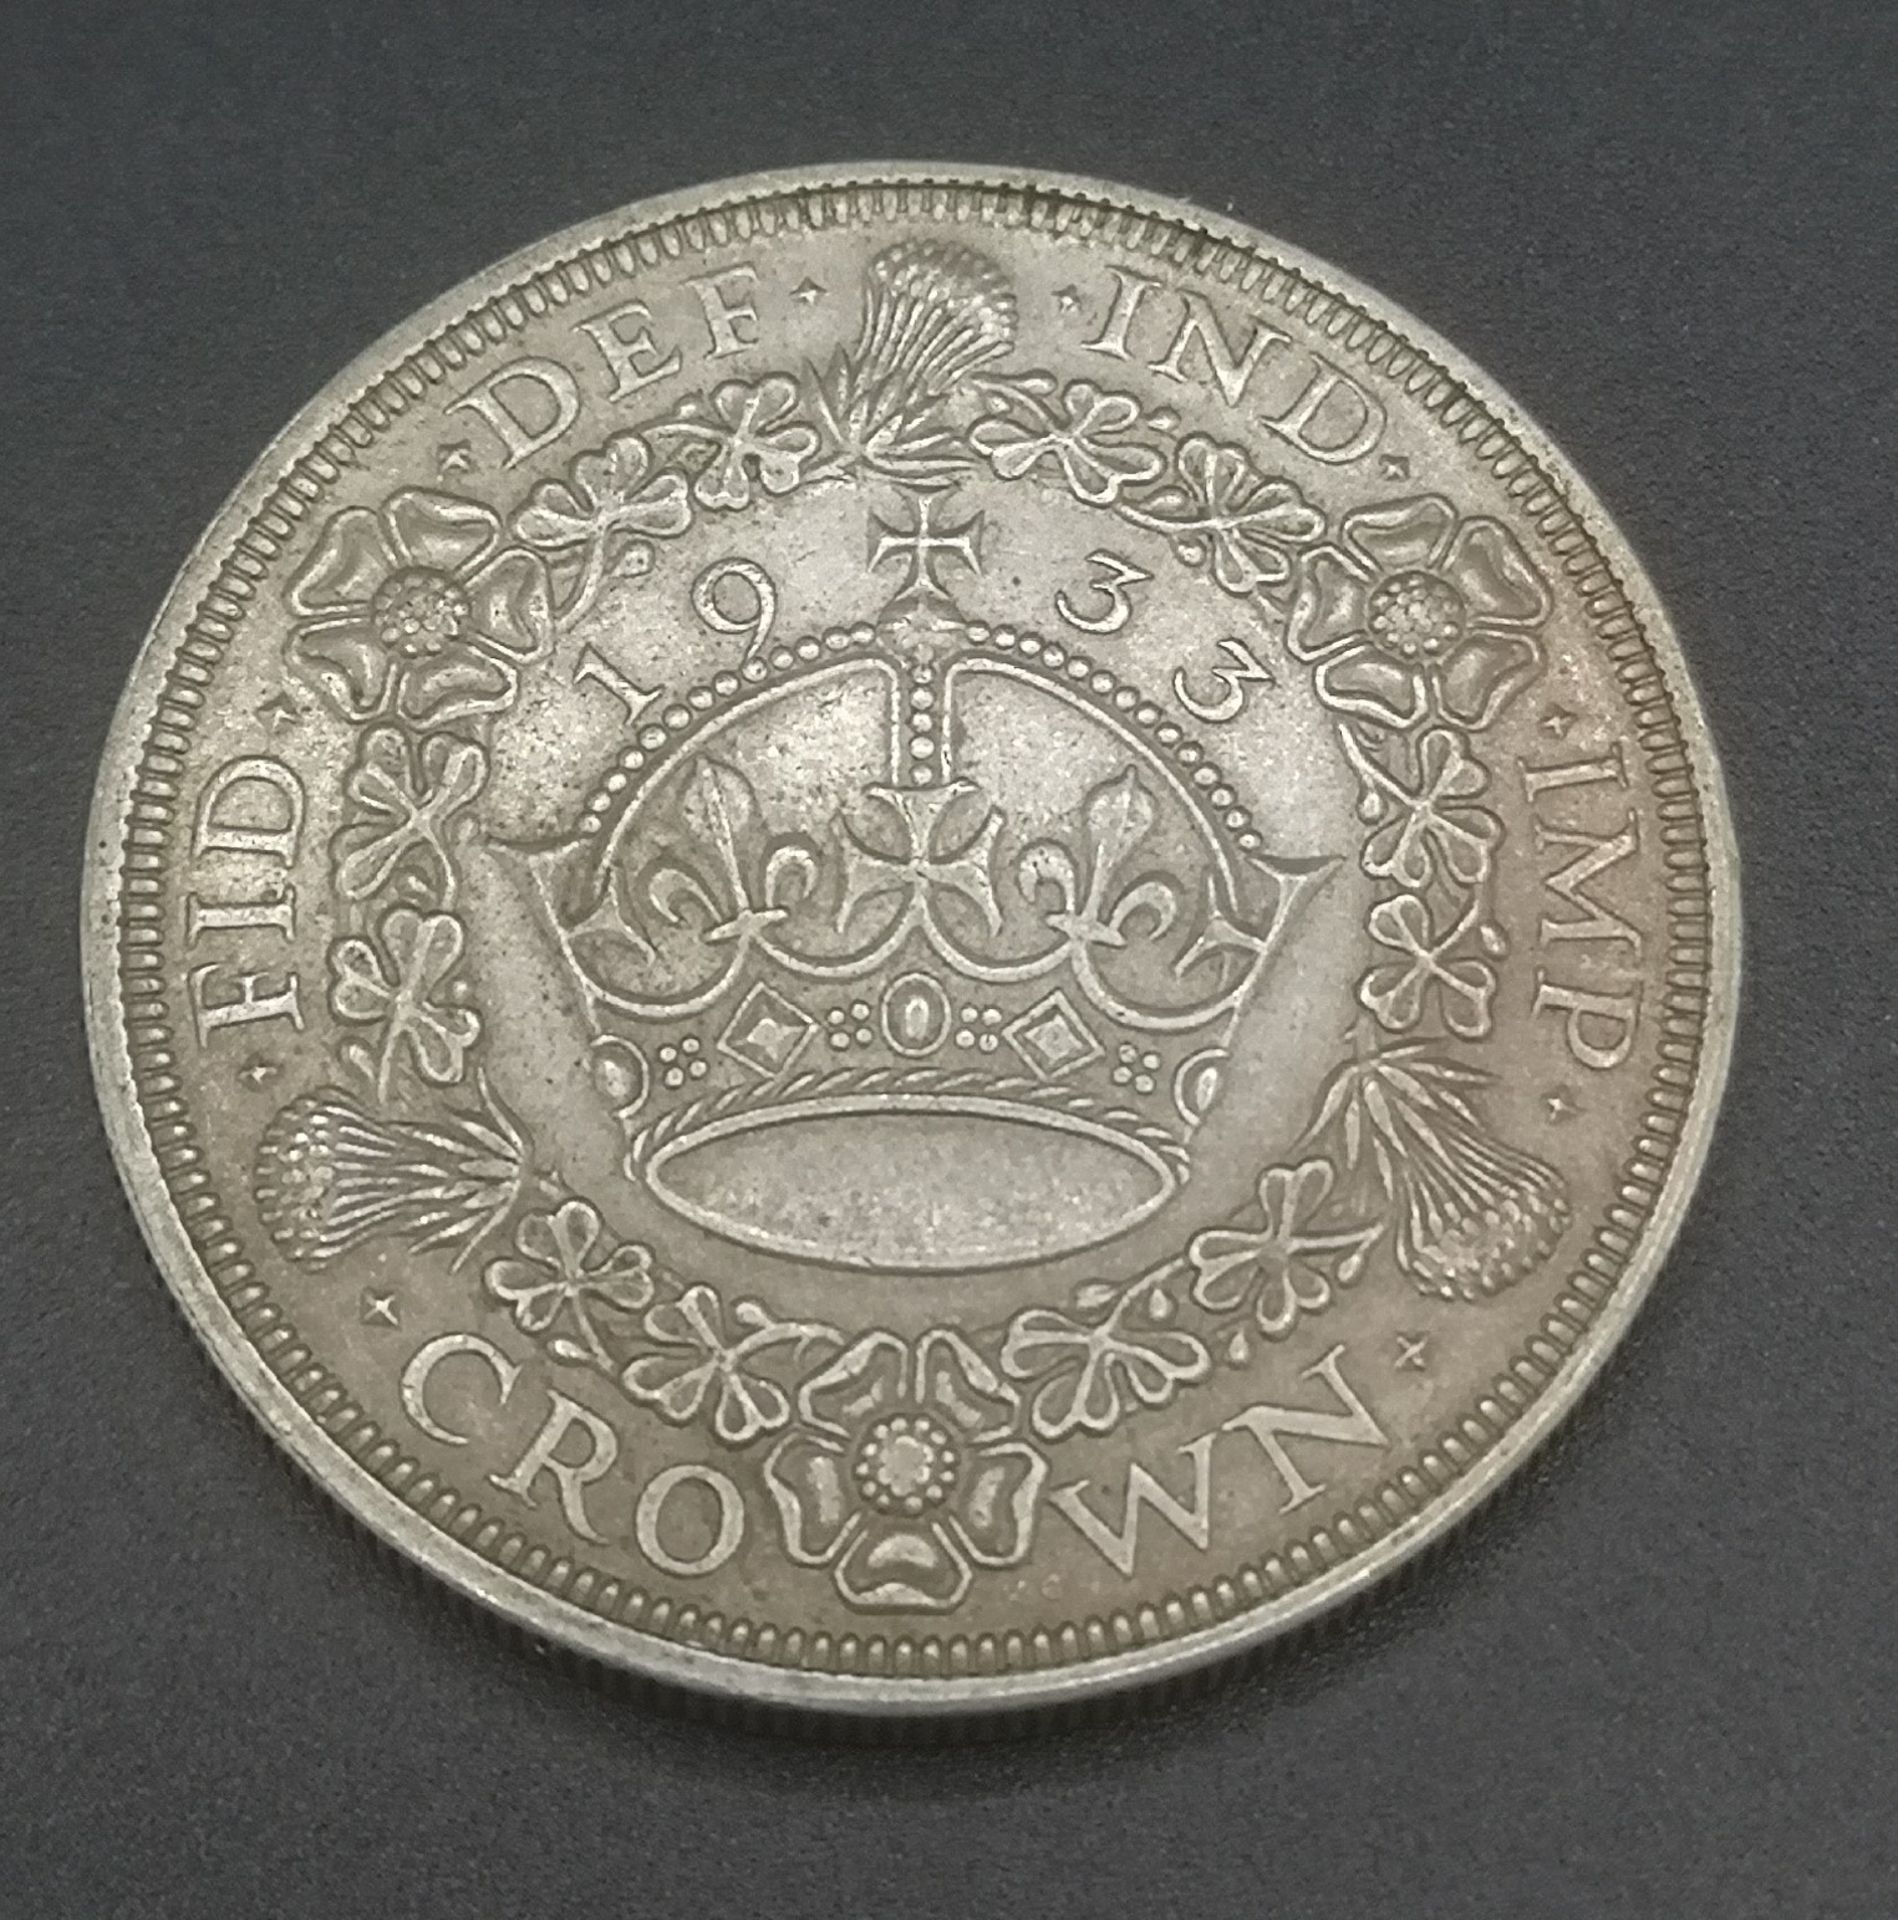 King George V 1933 wreath crown coin